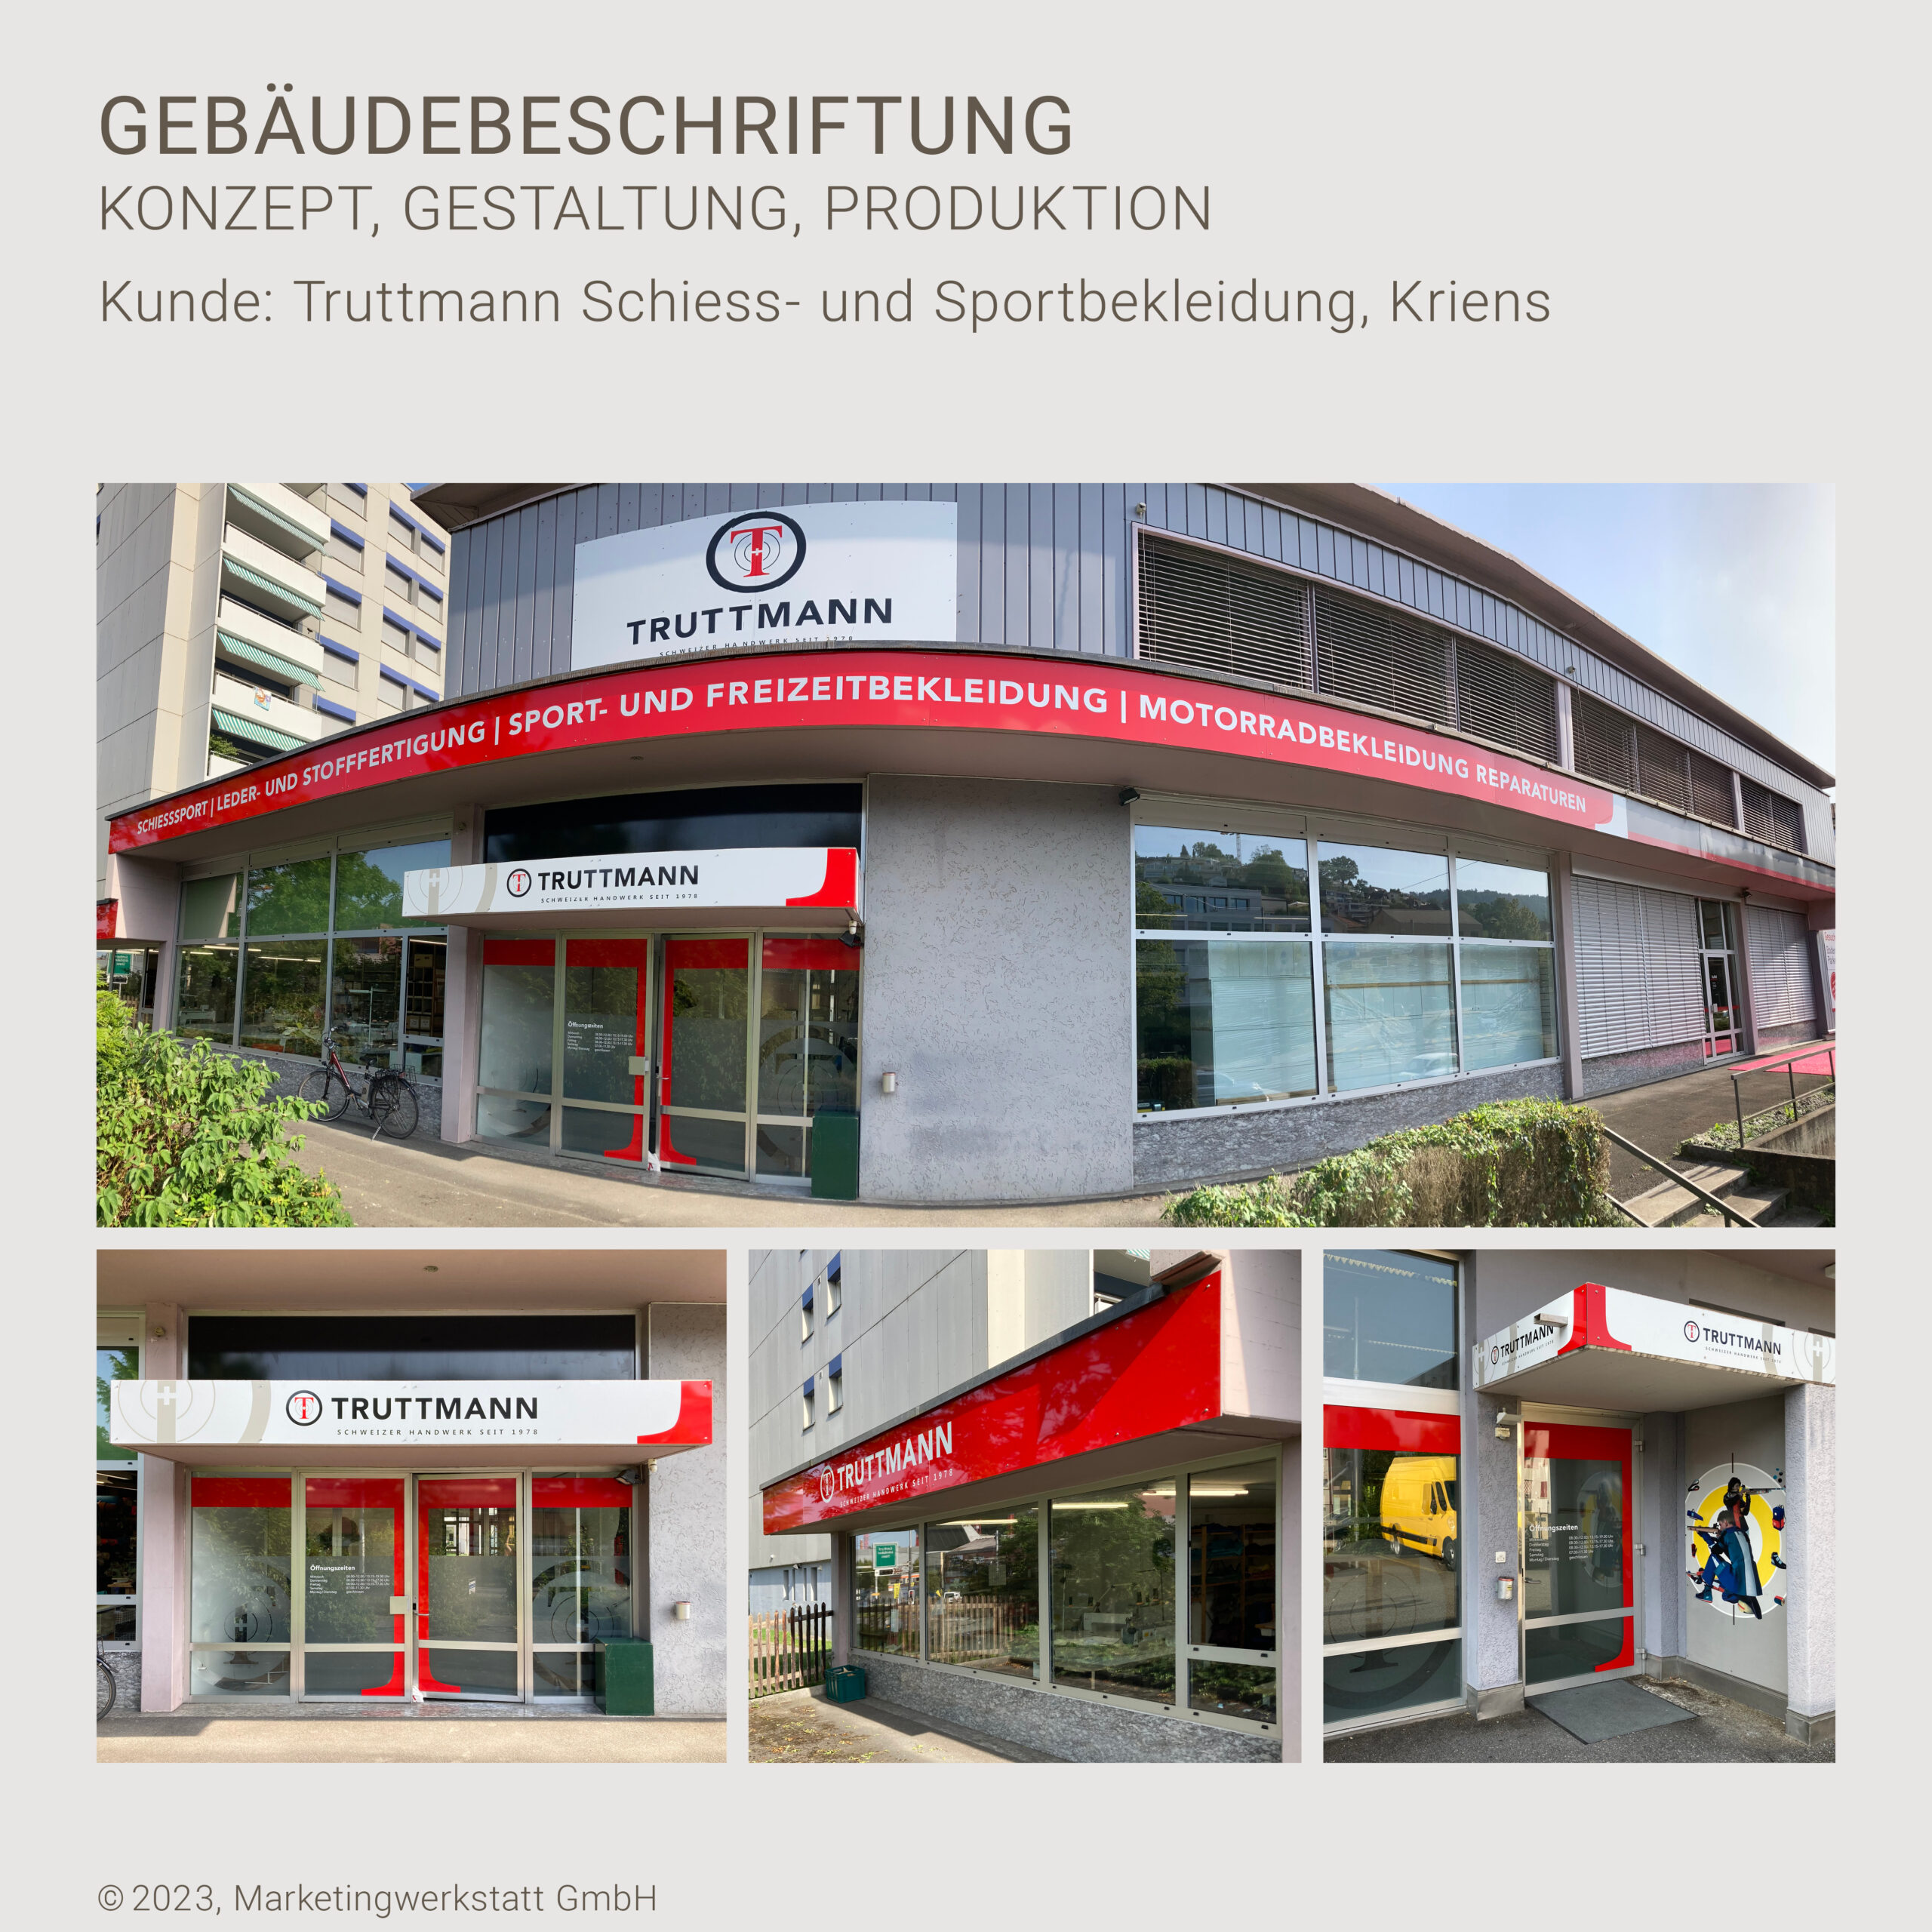 WEB1_MW_Projekt_Truttmann-Schiess-und-Sportbekleidung-Gebaudebeschriftung_09-2023